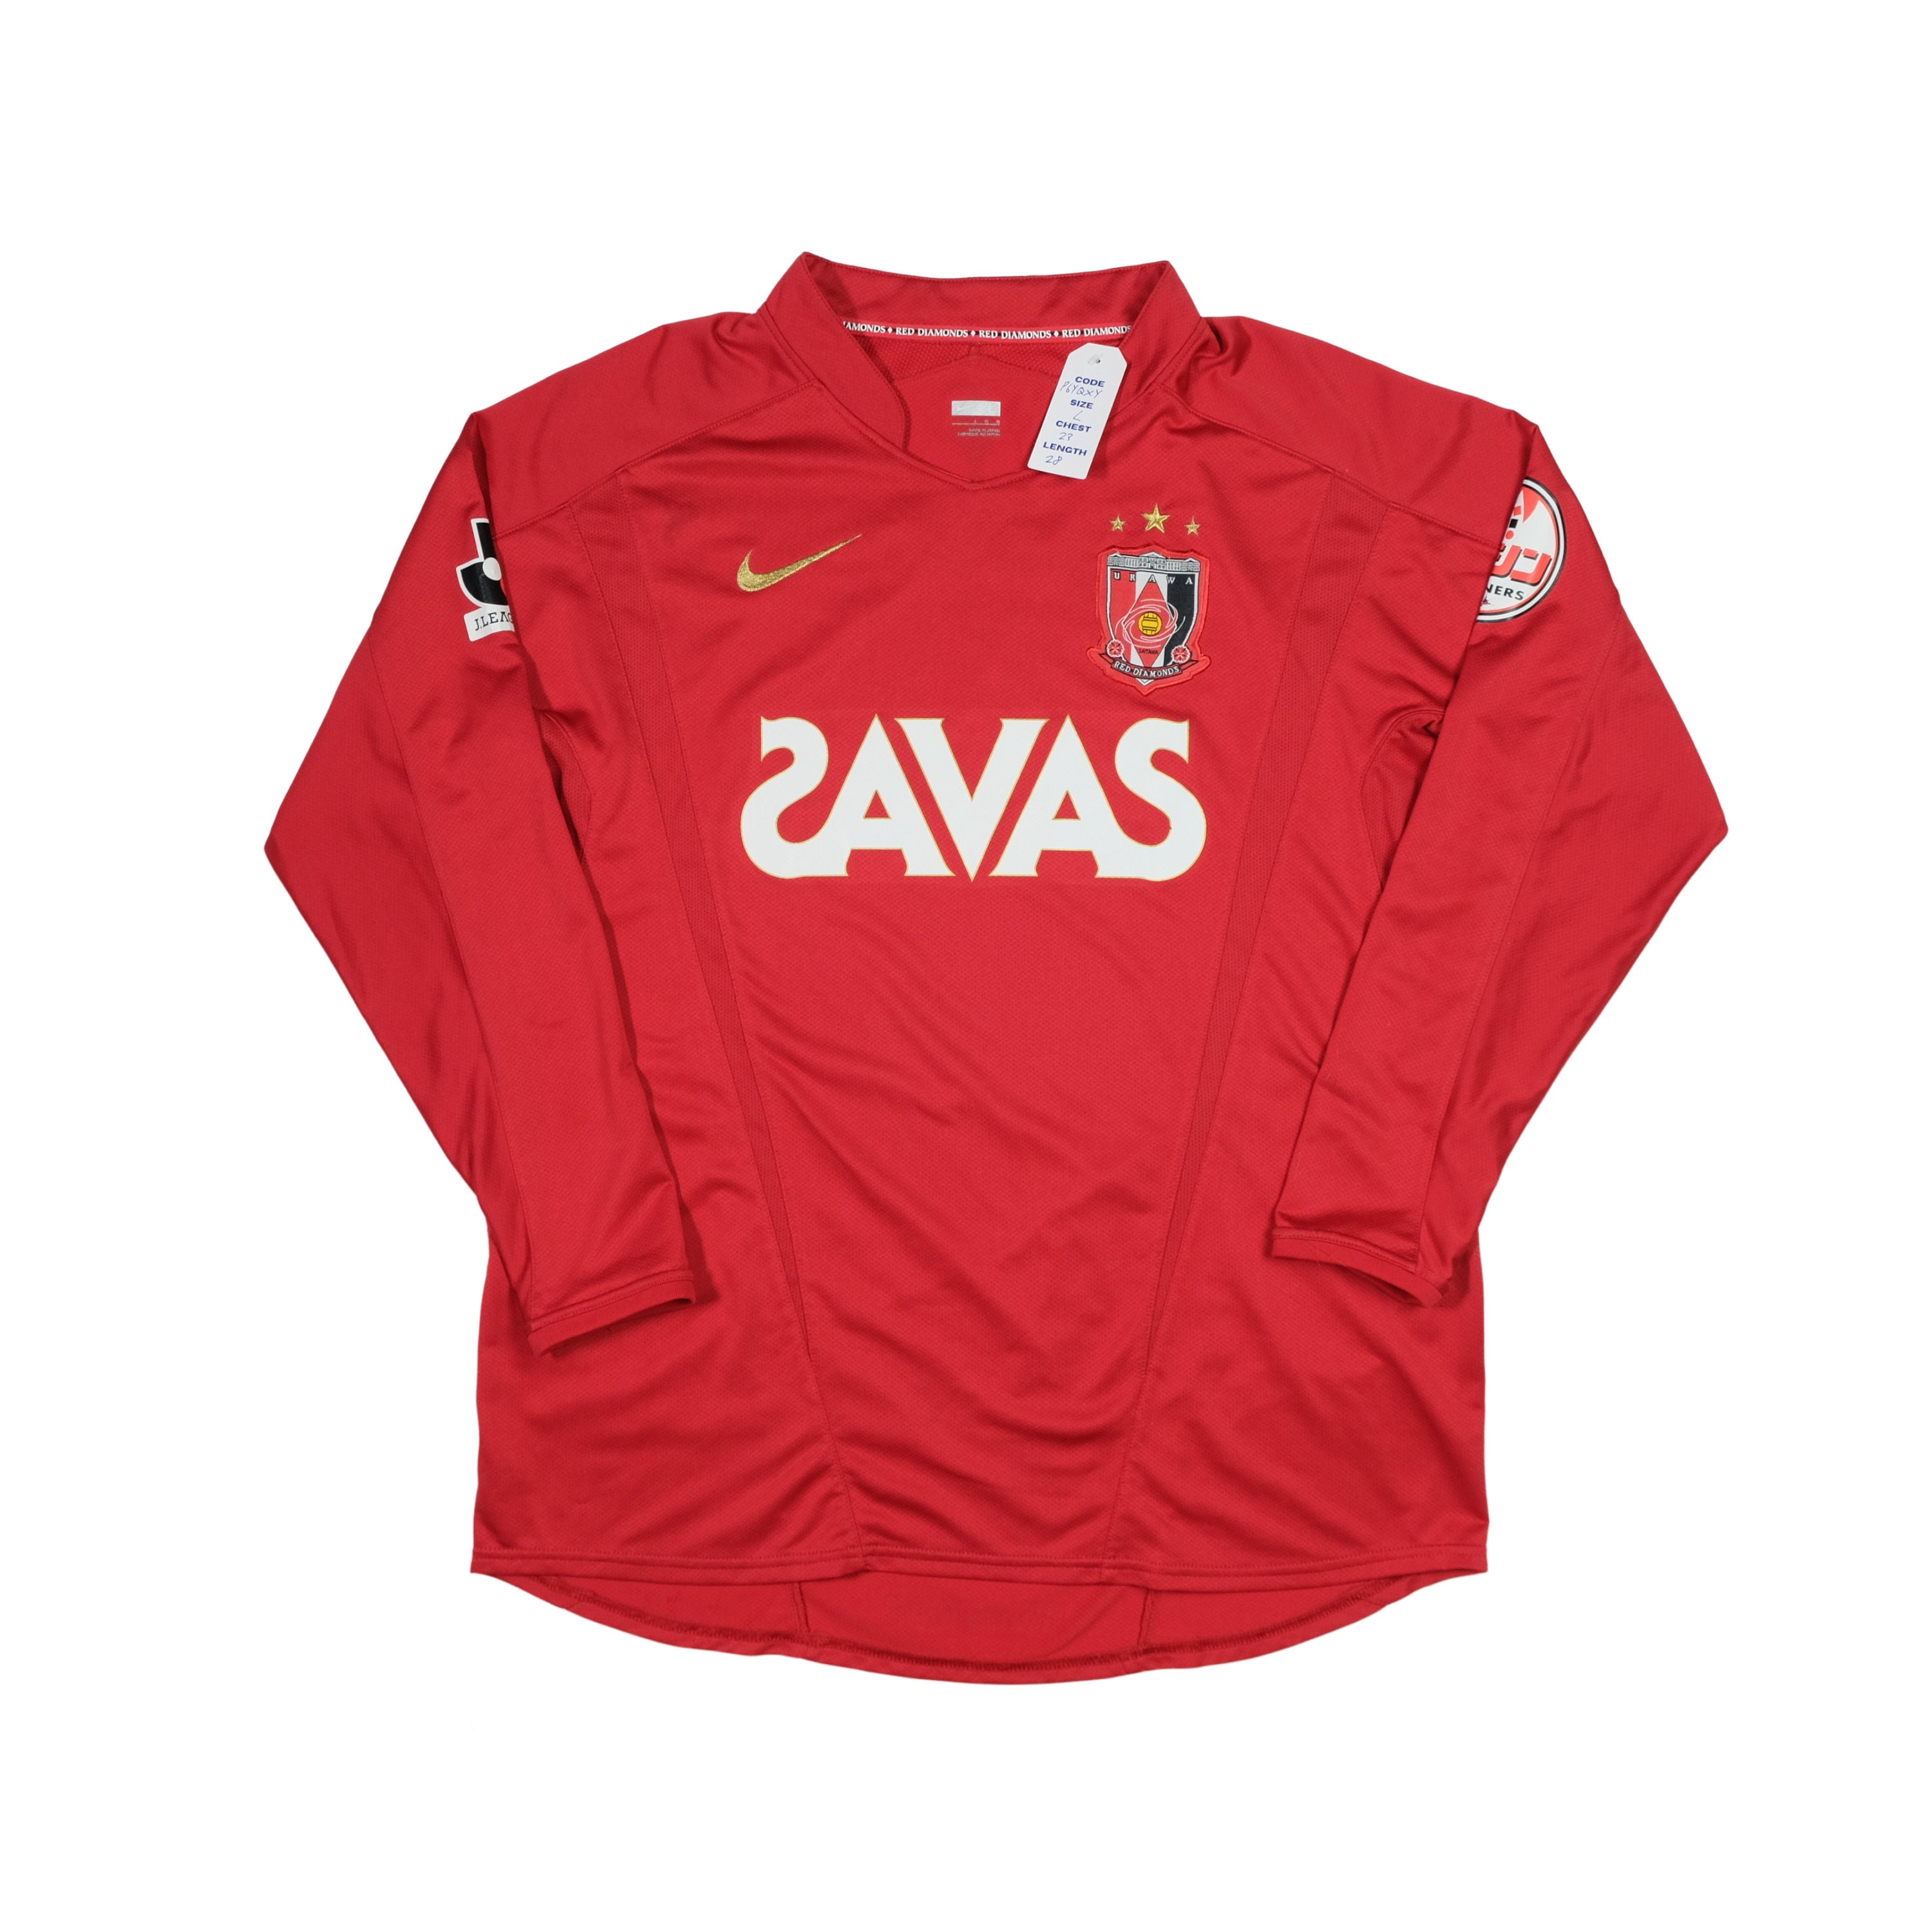 Urawa Red Diamonds Home football shirt 2004. Sponsored by Mitsubishi